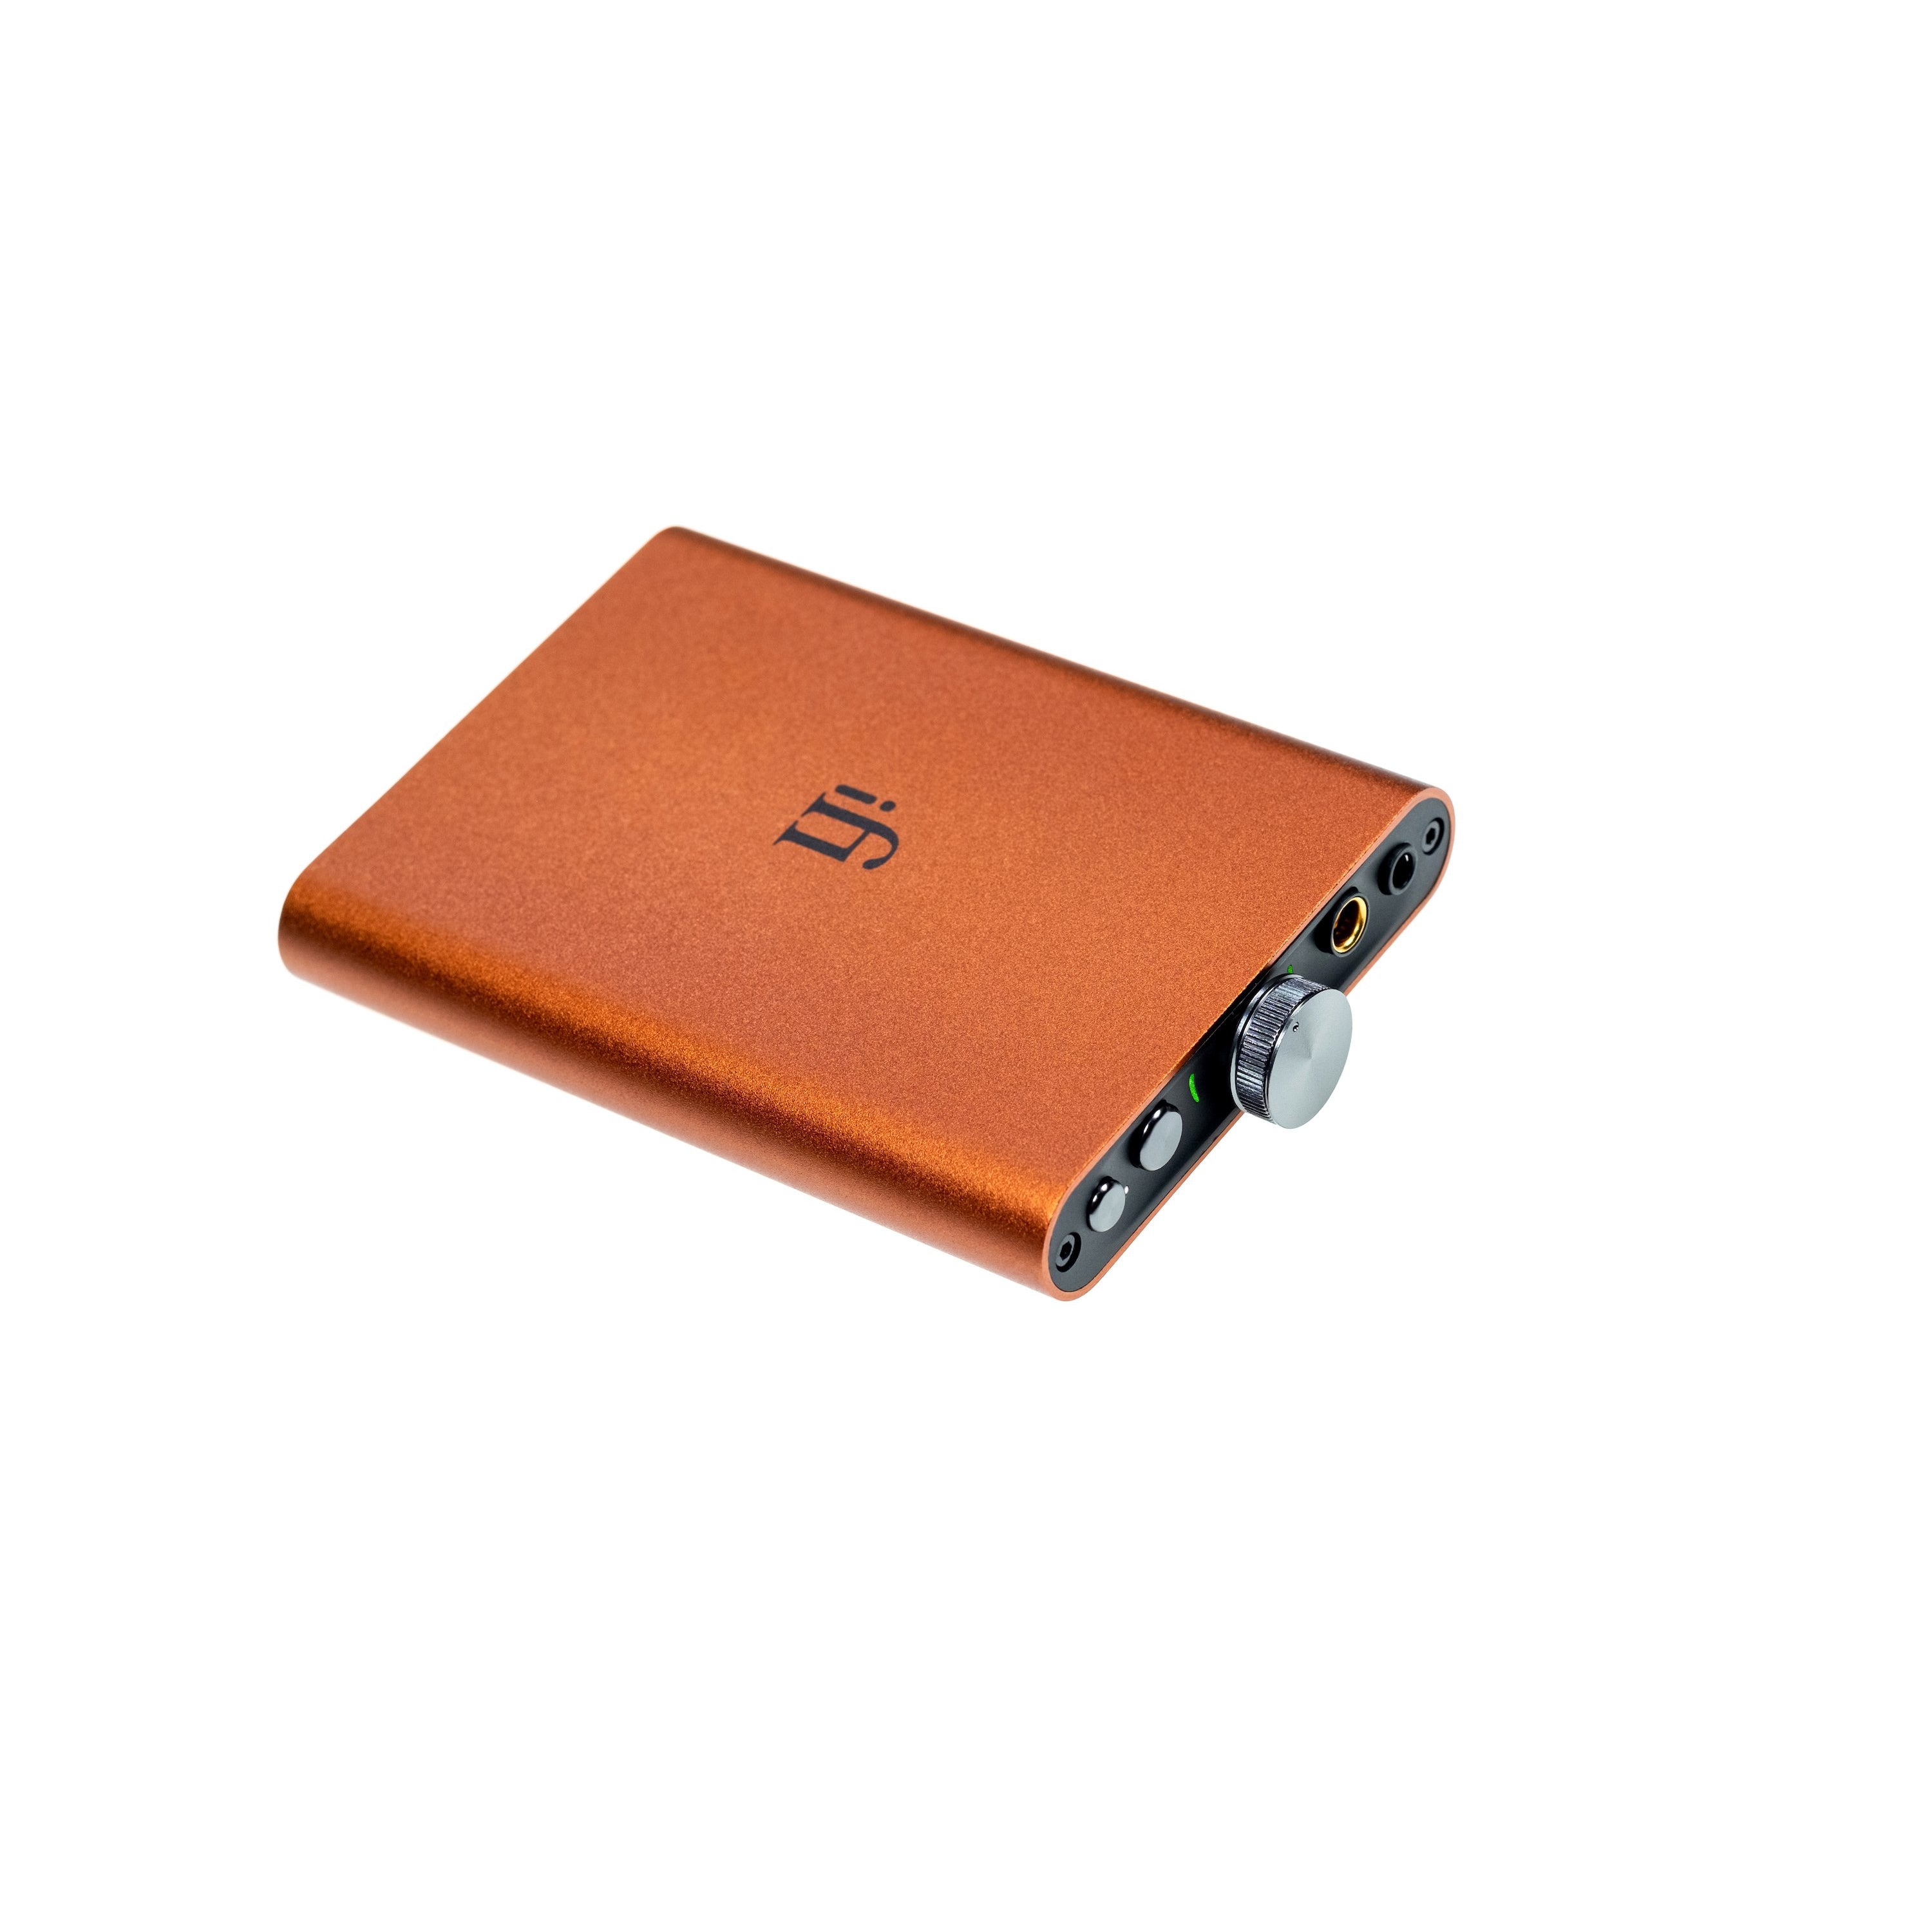 iFi hip-dac2 | Portable DAC and Amp